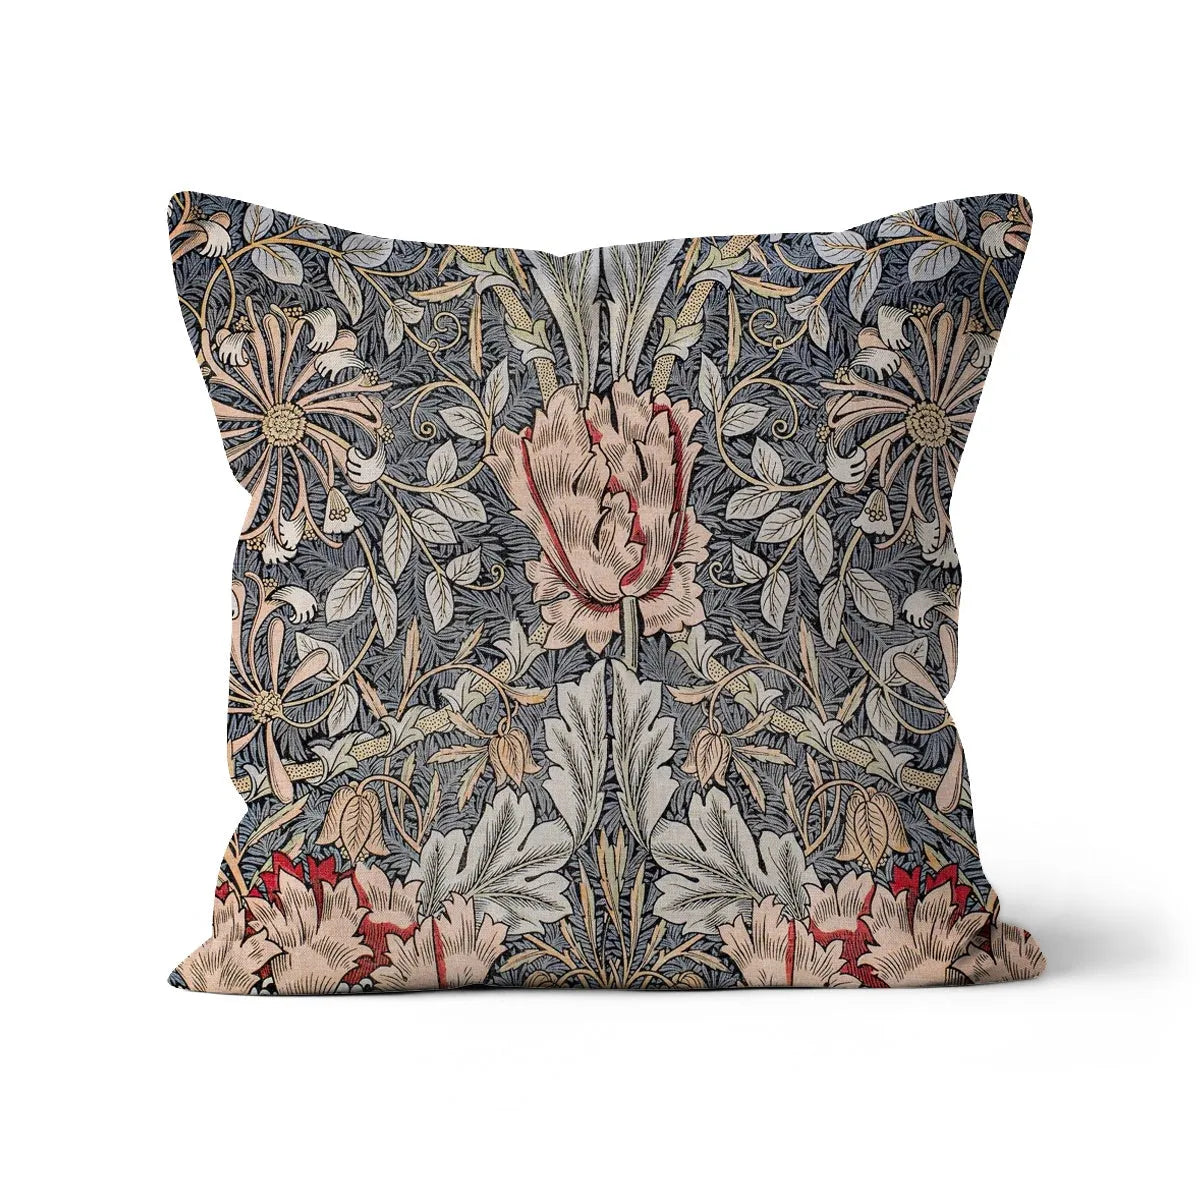 Honeysuckle - William Morris Cushion - Decorative Throw Pillow - Linen / 18’x18’ - Throw Pillows - Aesthetic Art